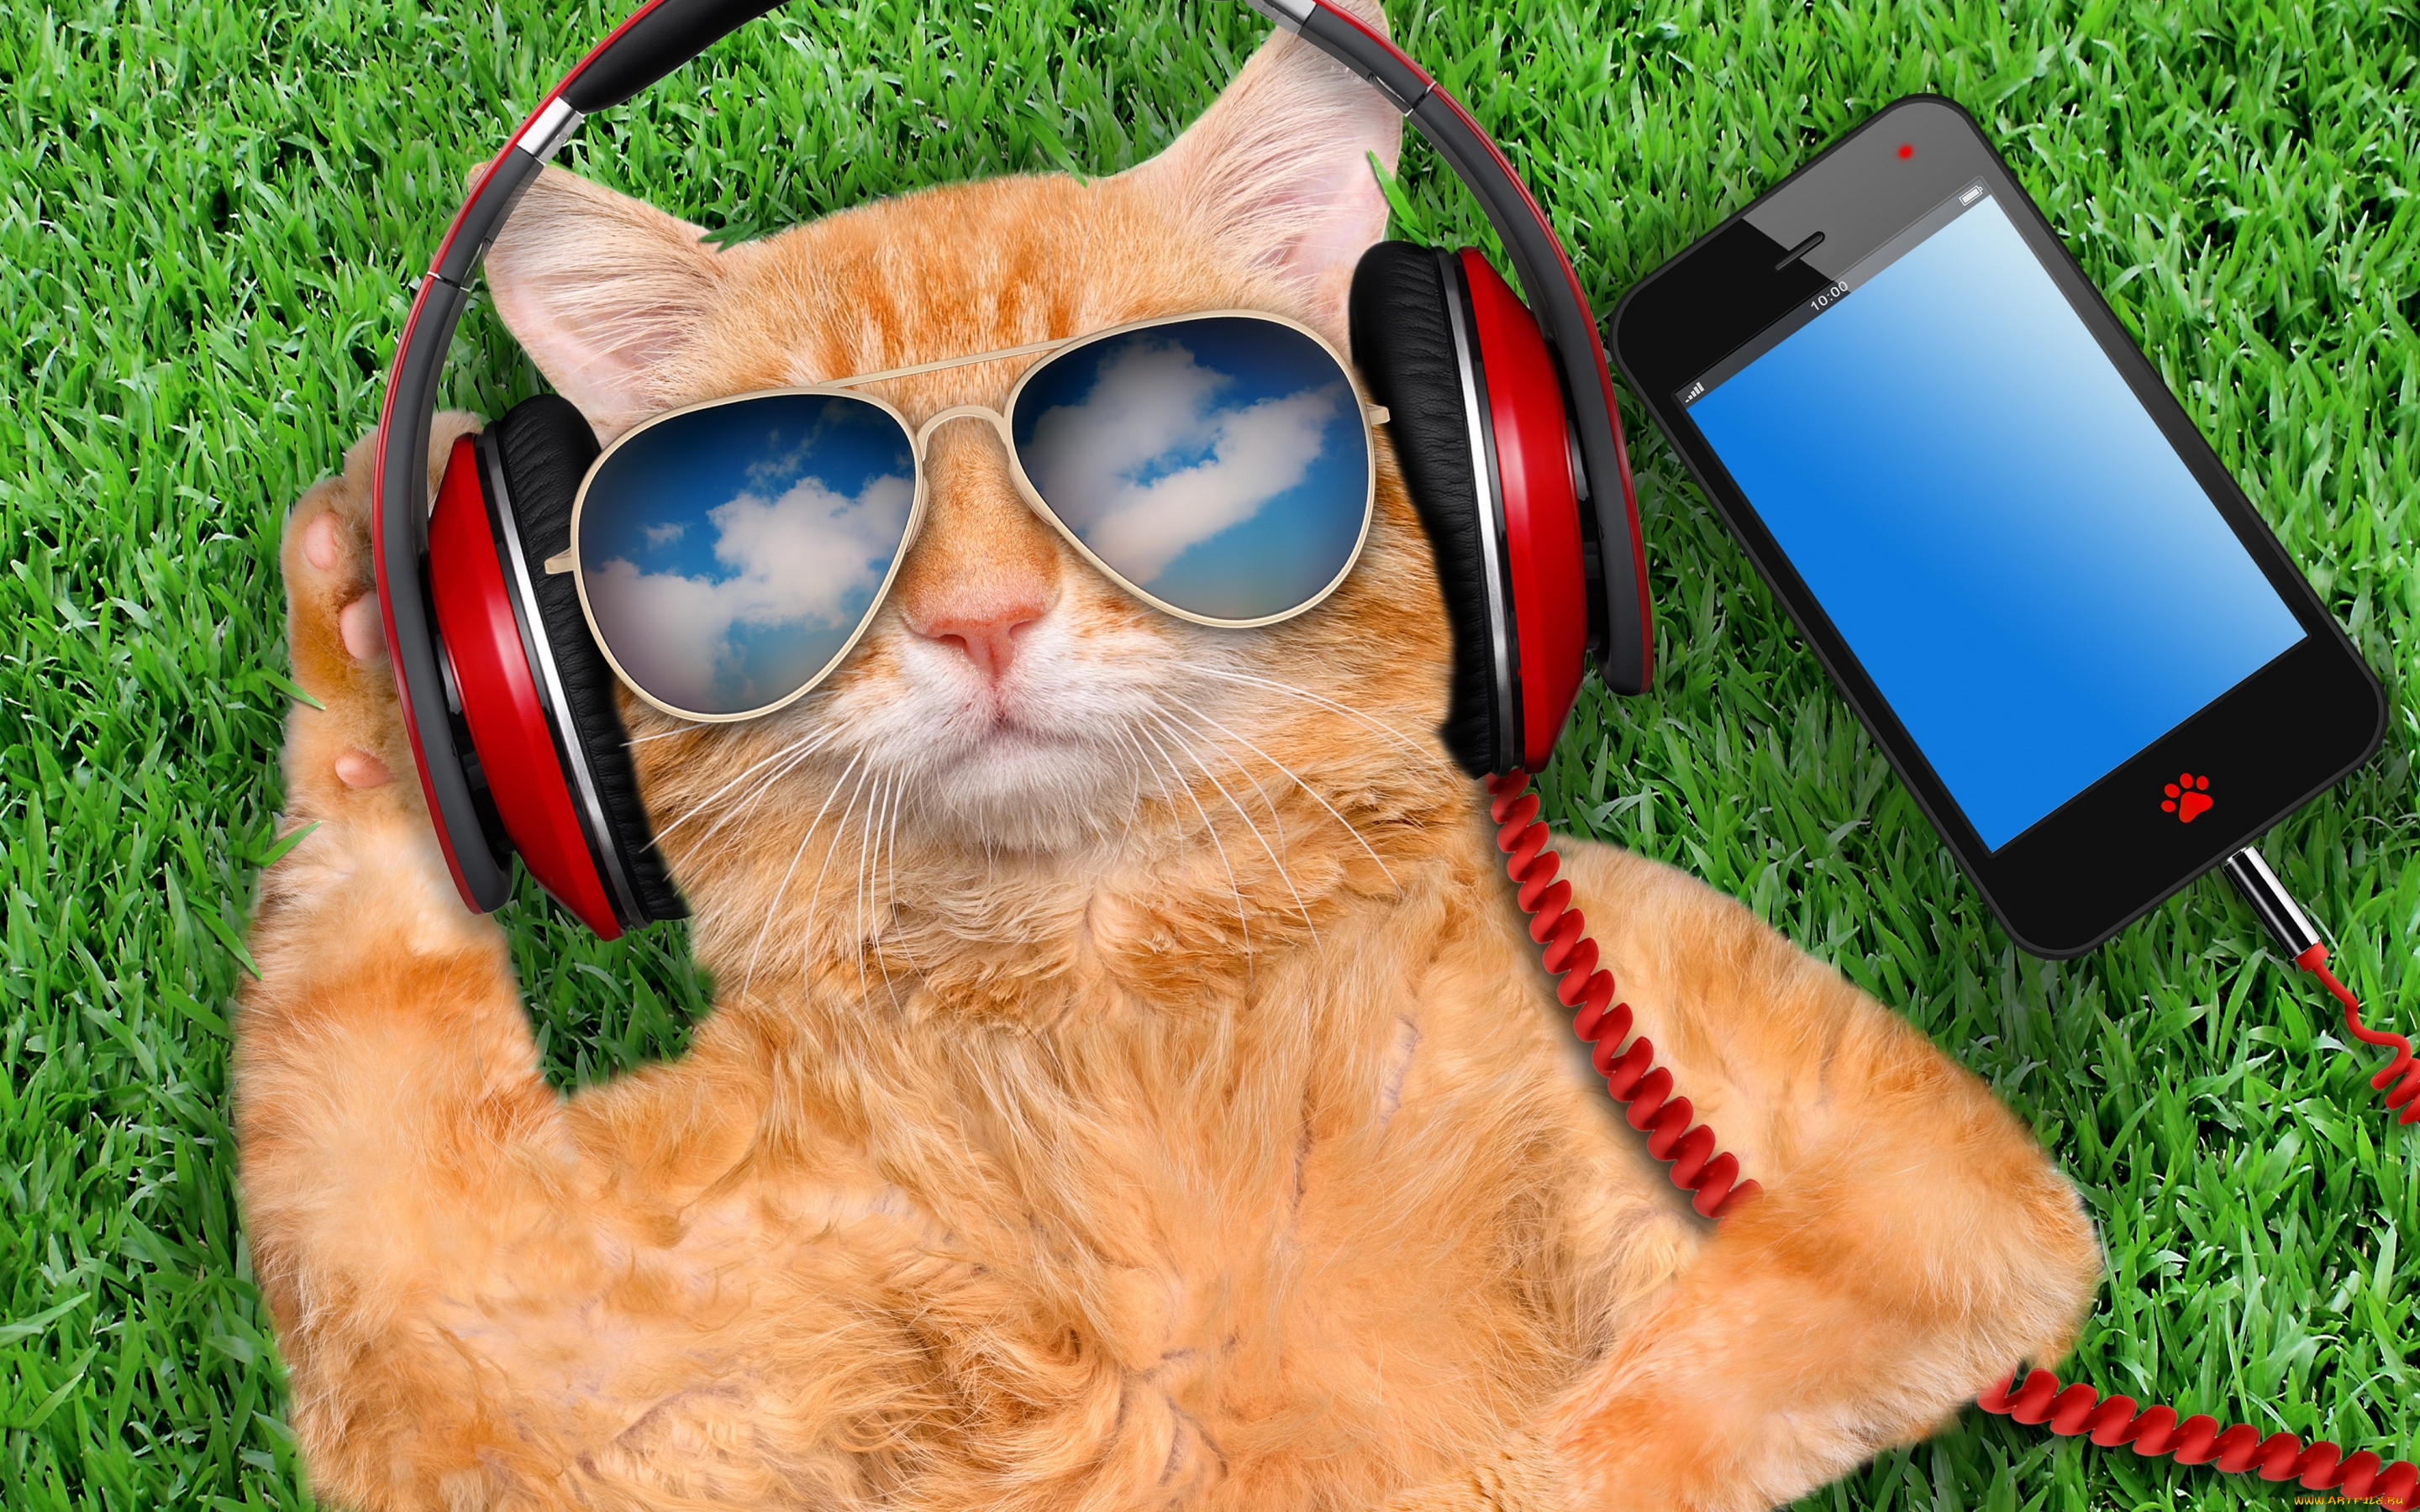   , grass, cat, glasses, smart, phone